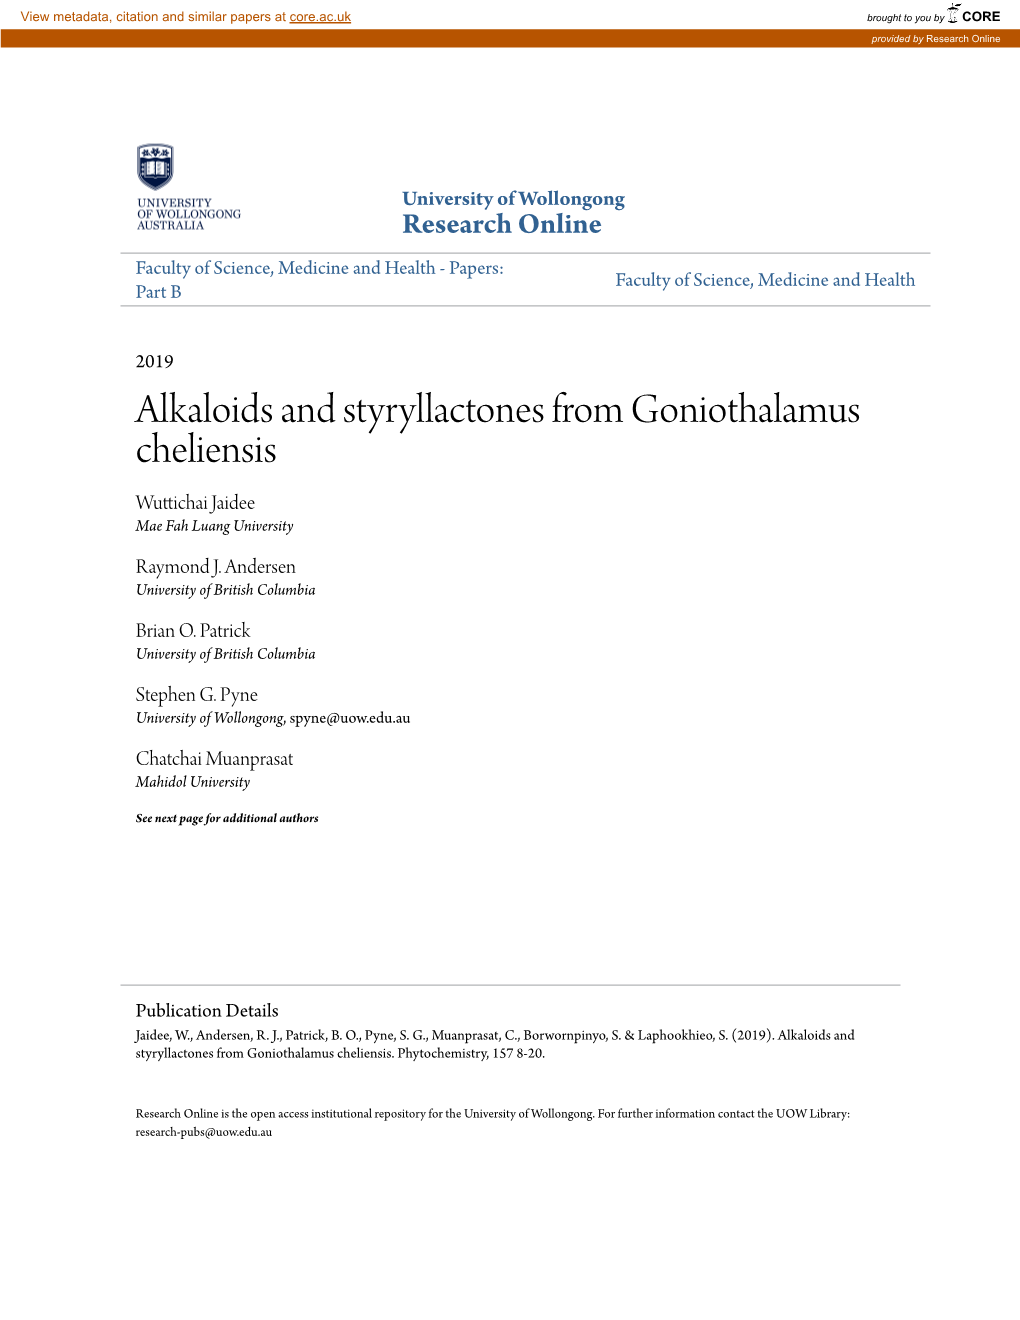 Alkaloids and Styryllactones from Goniothalamus Cheliensis Wuttichai Jaidee Mae Fah Luang University